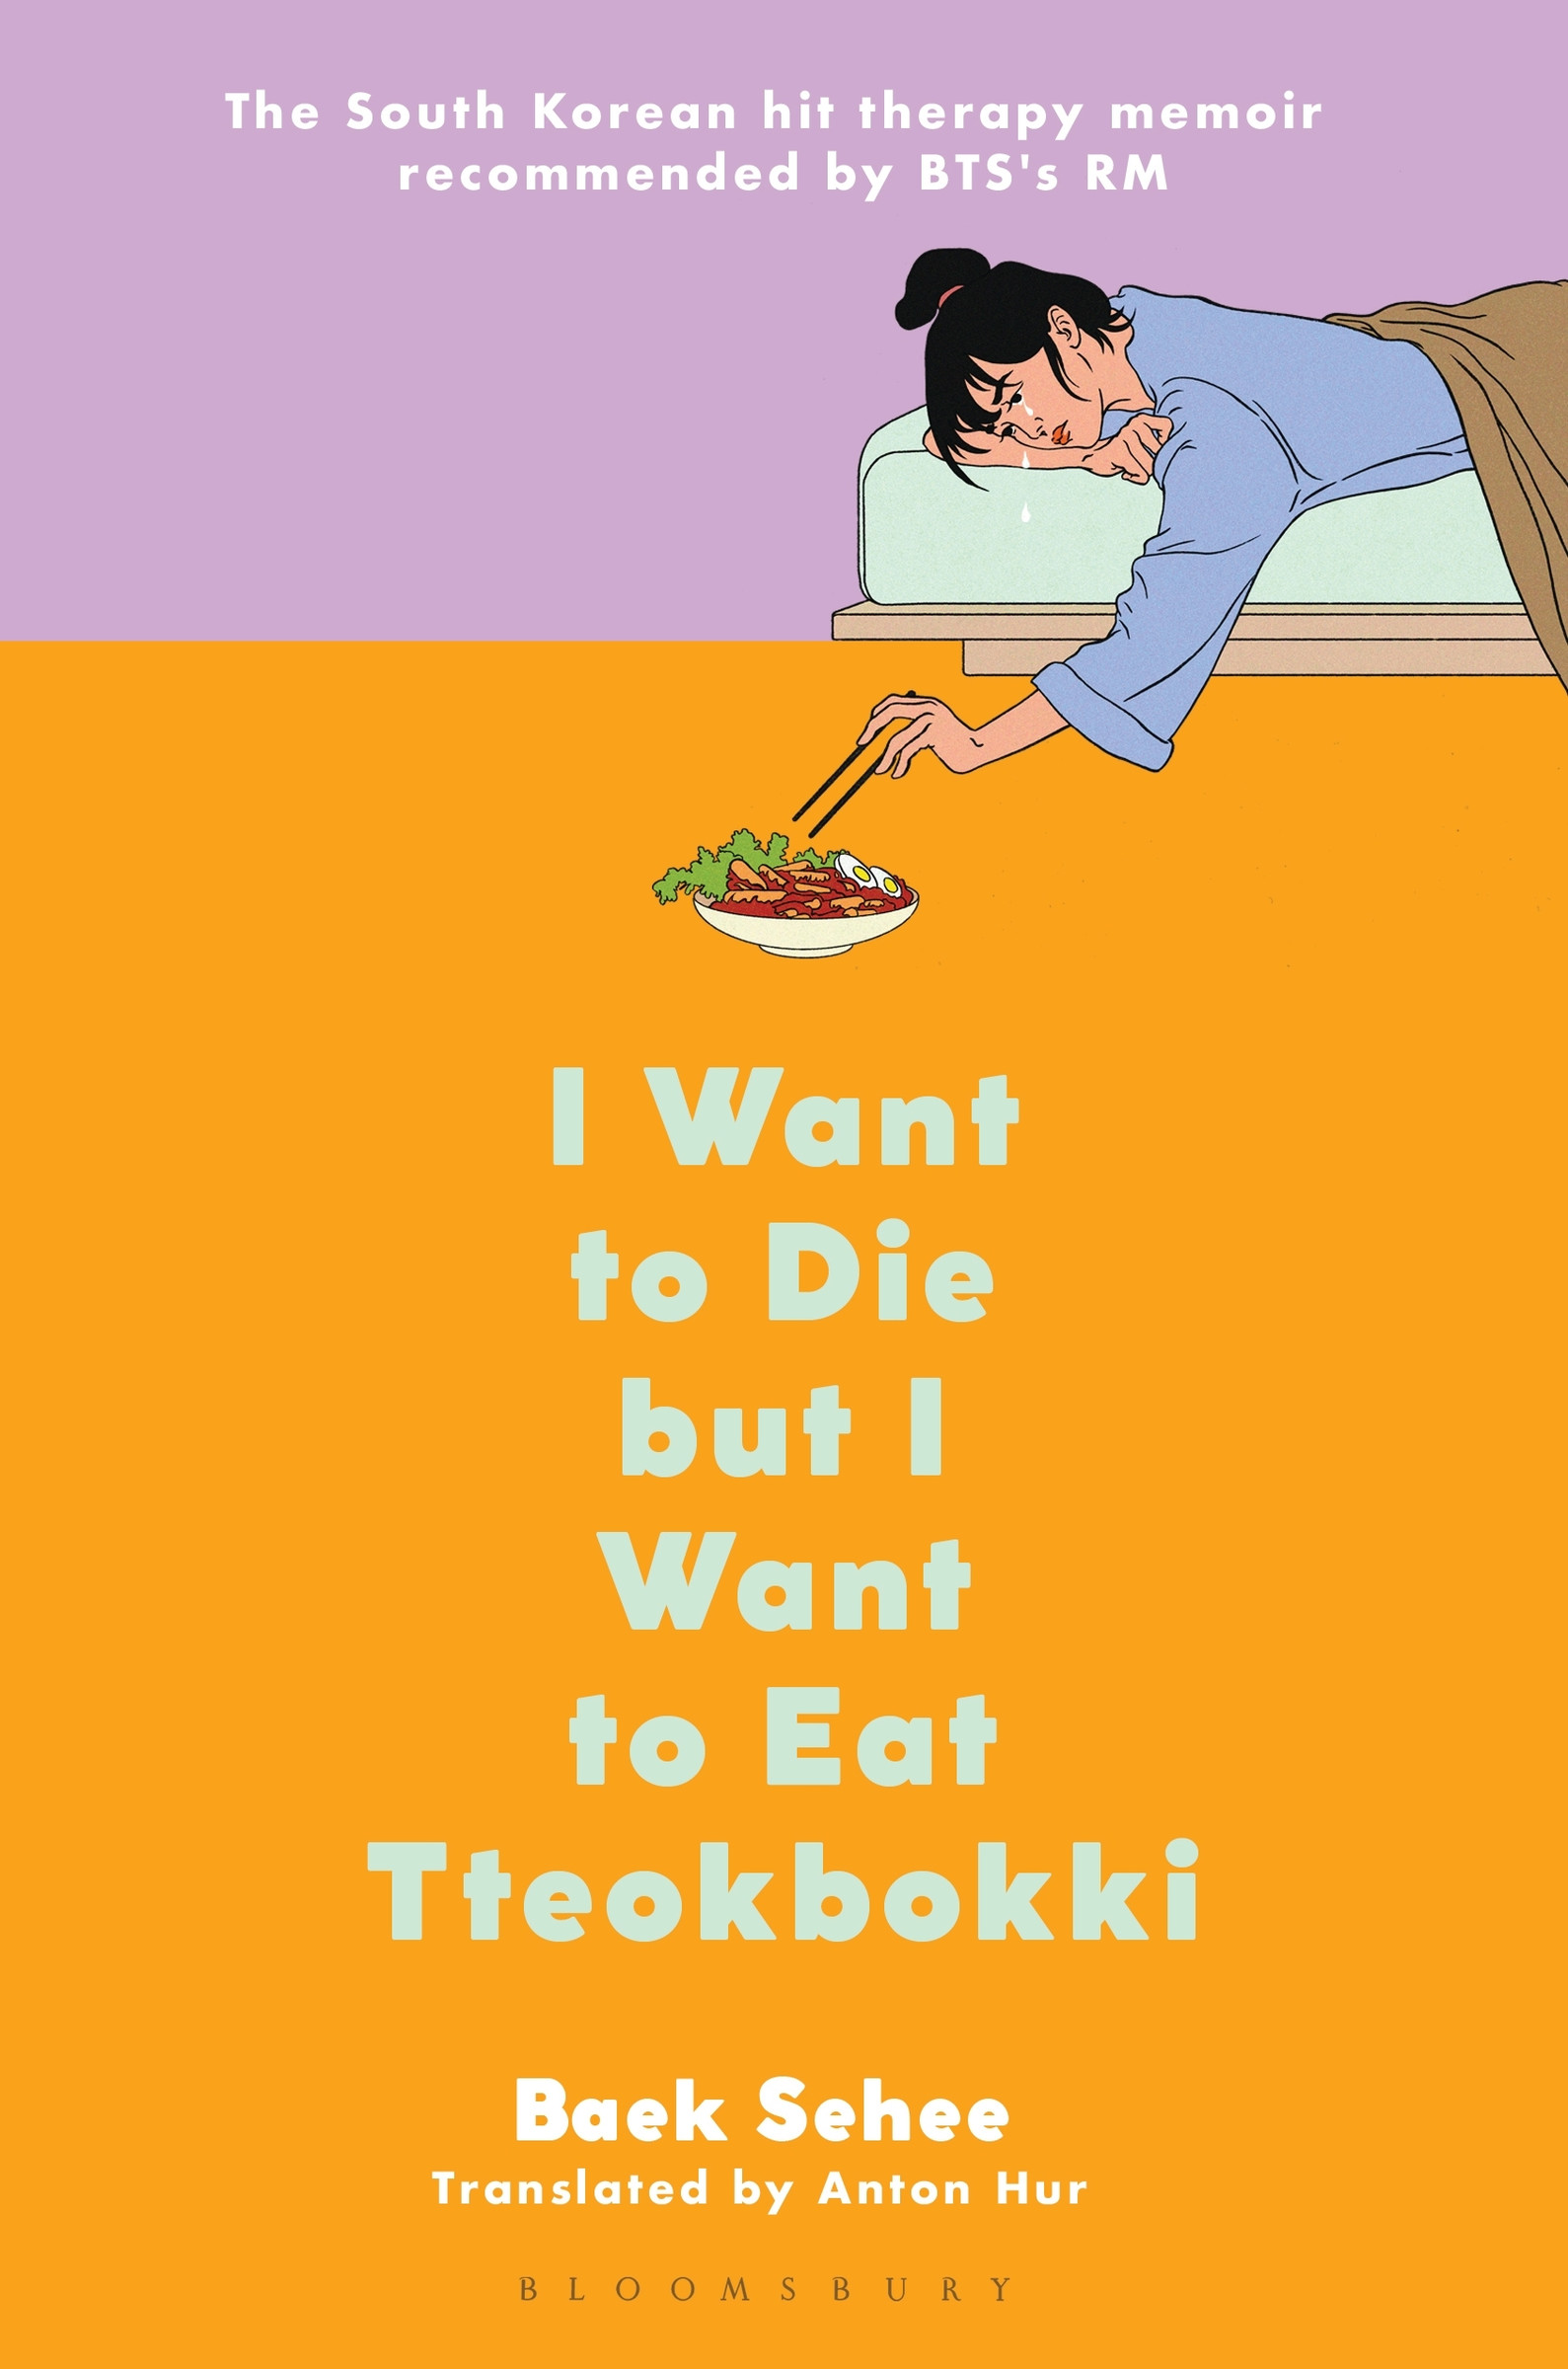 I Want to Die but I Want to Eat Tteokbokki : A Memoir | Biography & Memoir